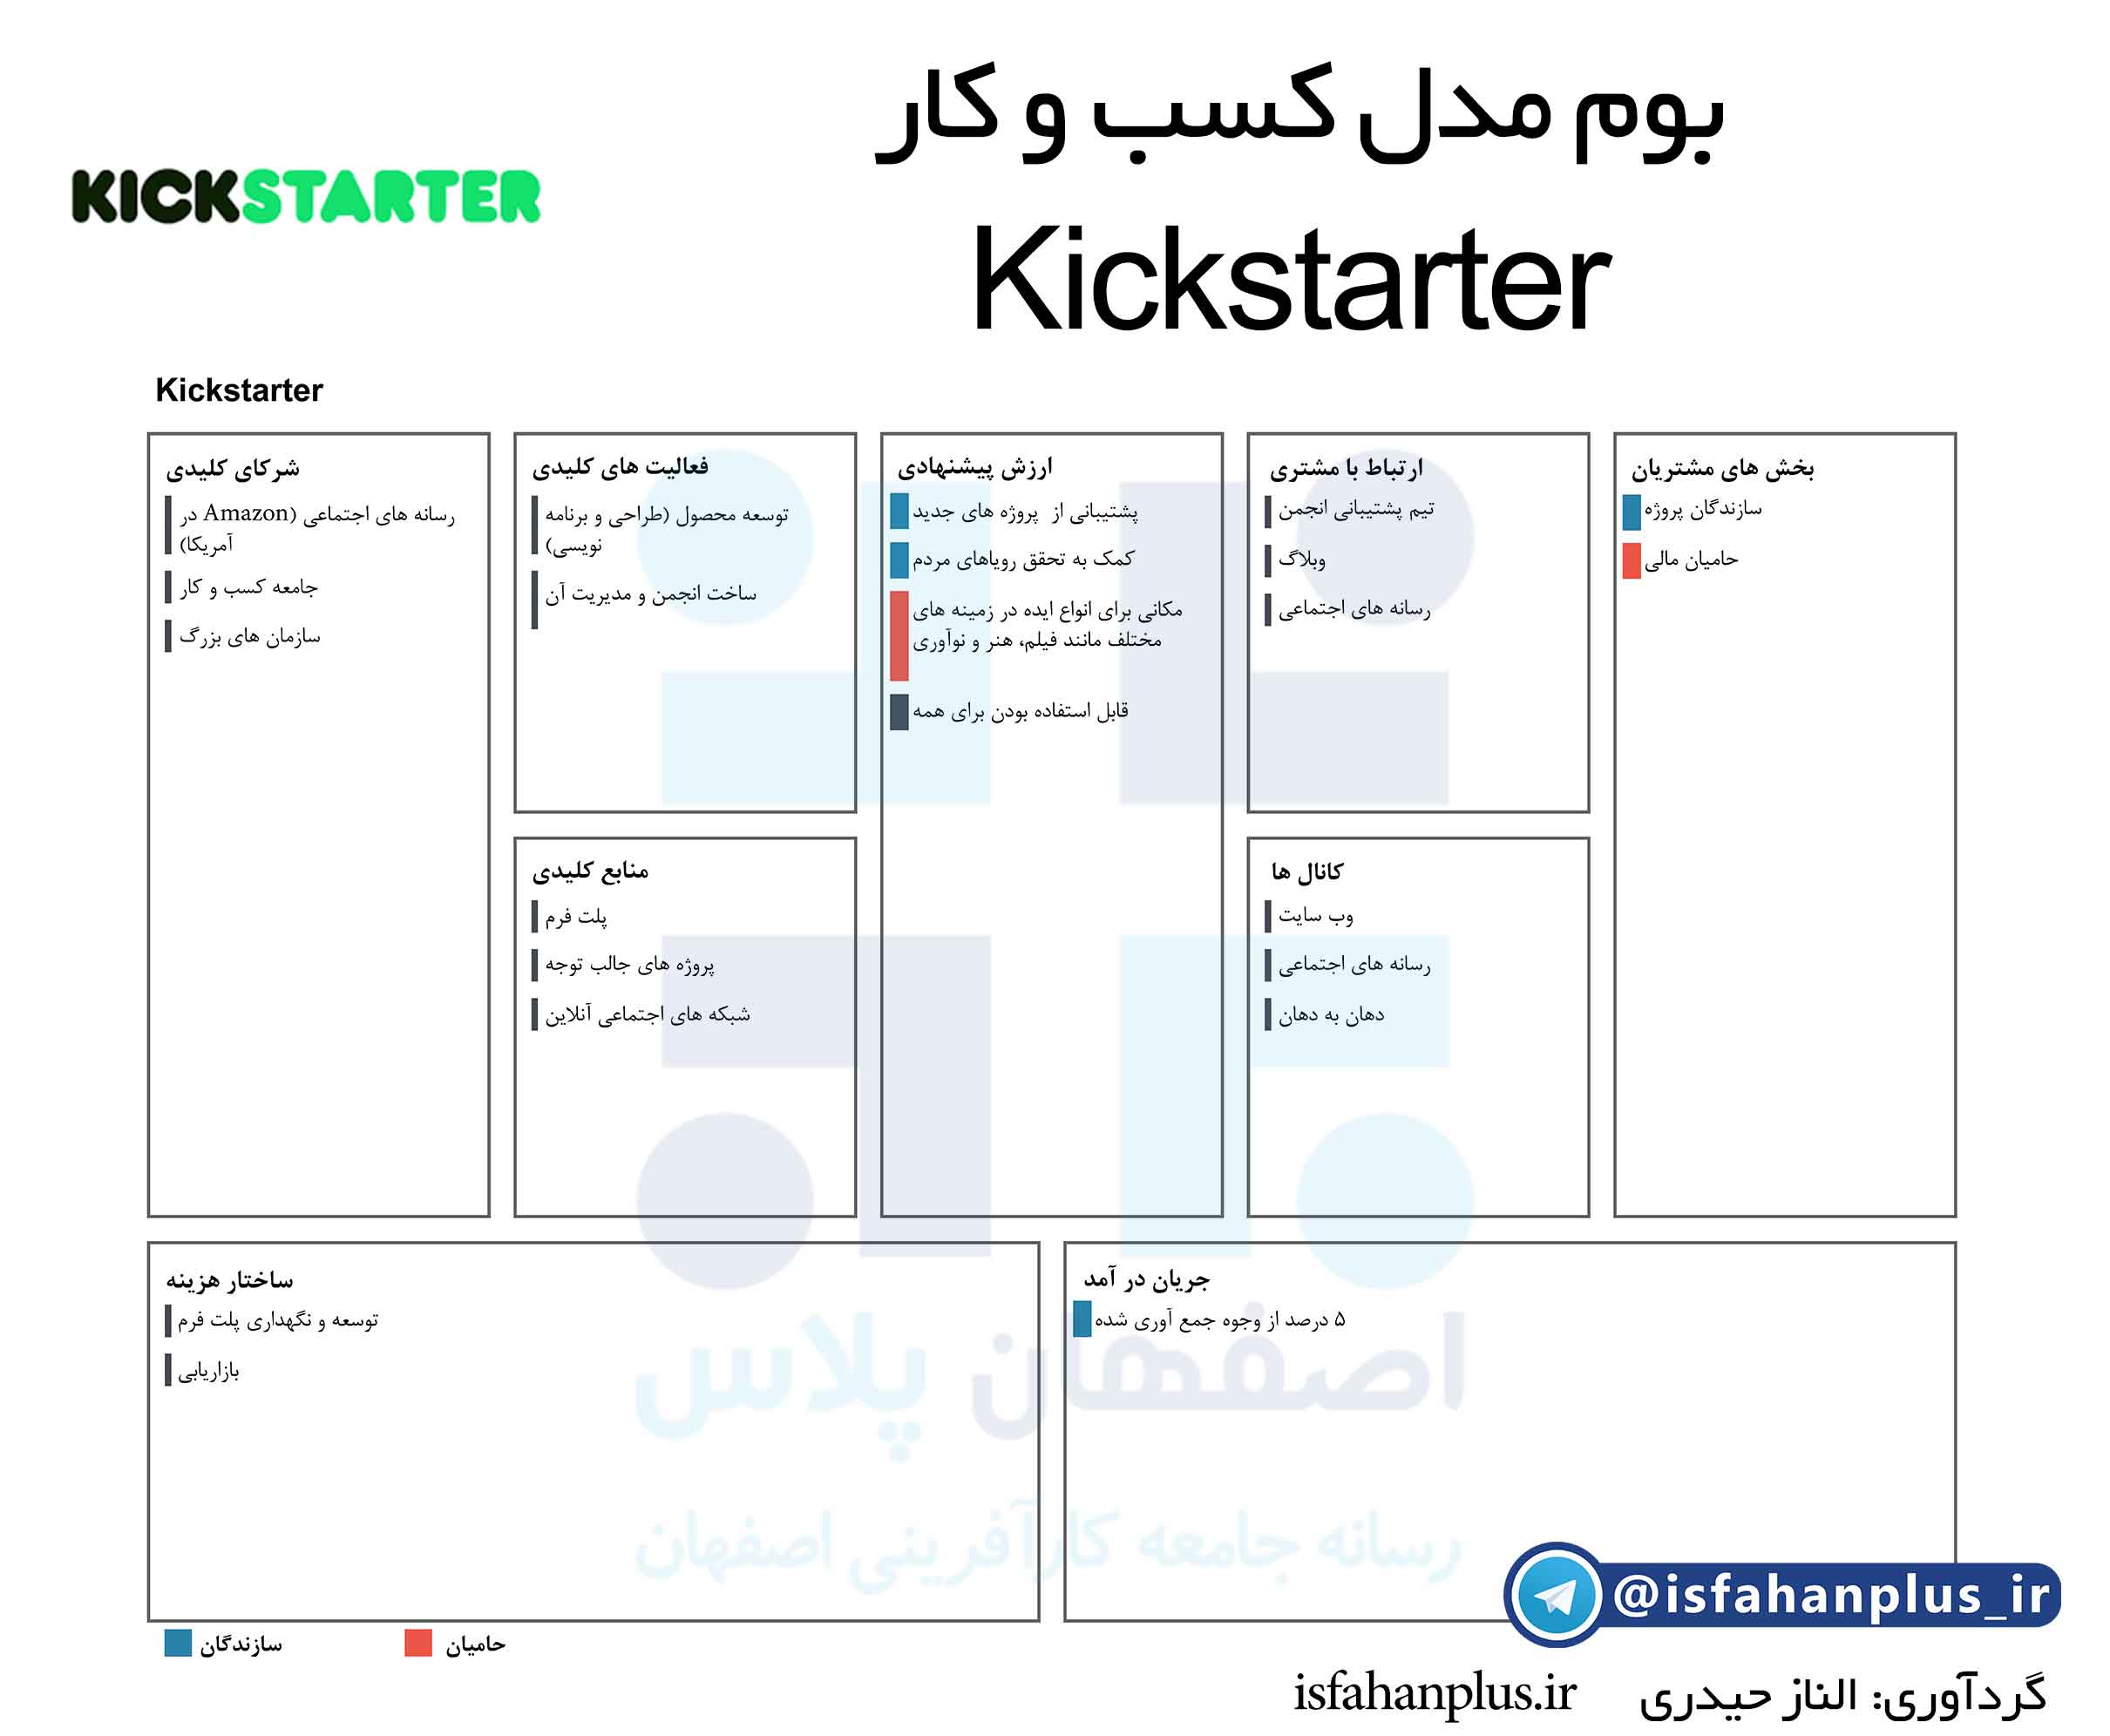 kickstarterLQ